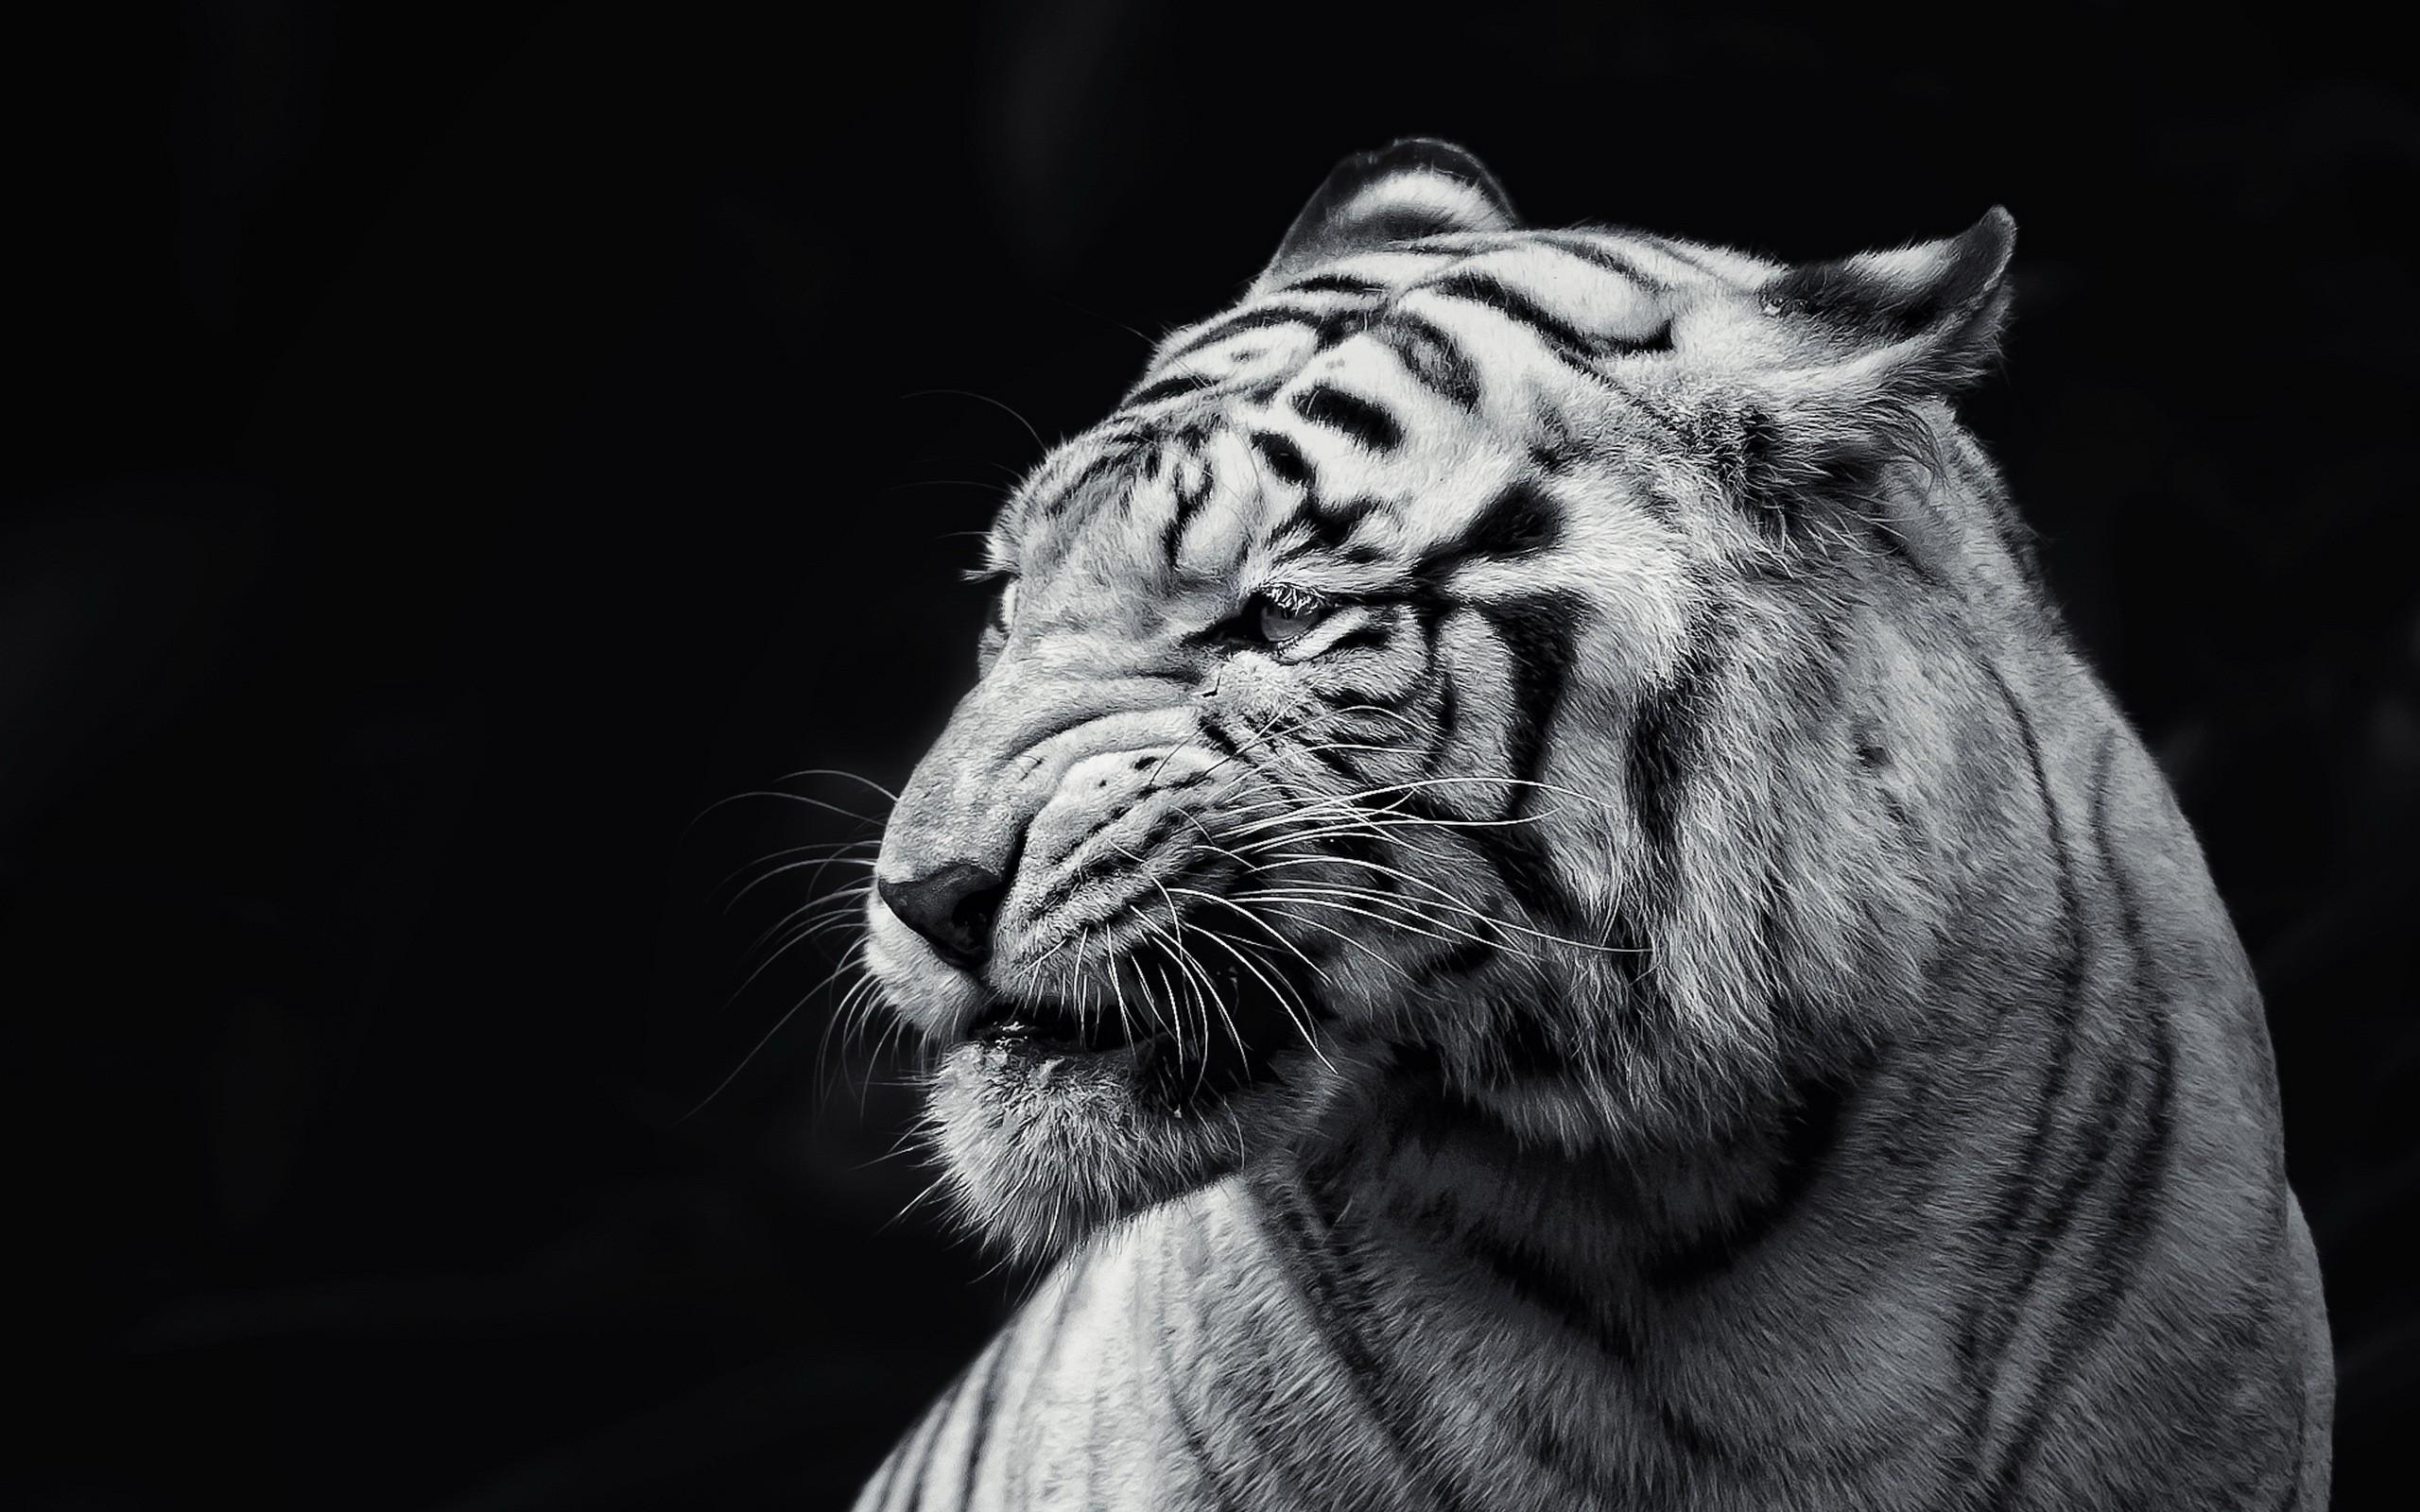 Black and White Tigerjpg Image JPEG 2560x1600 pixels